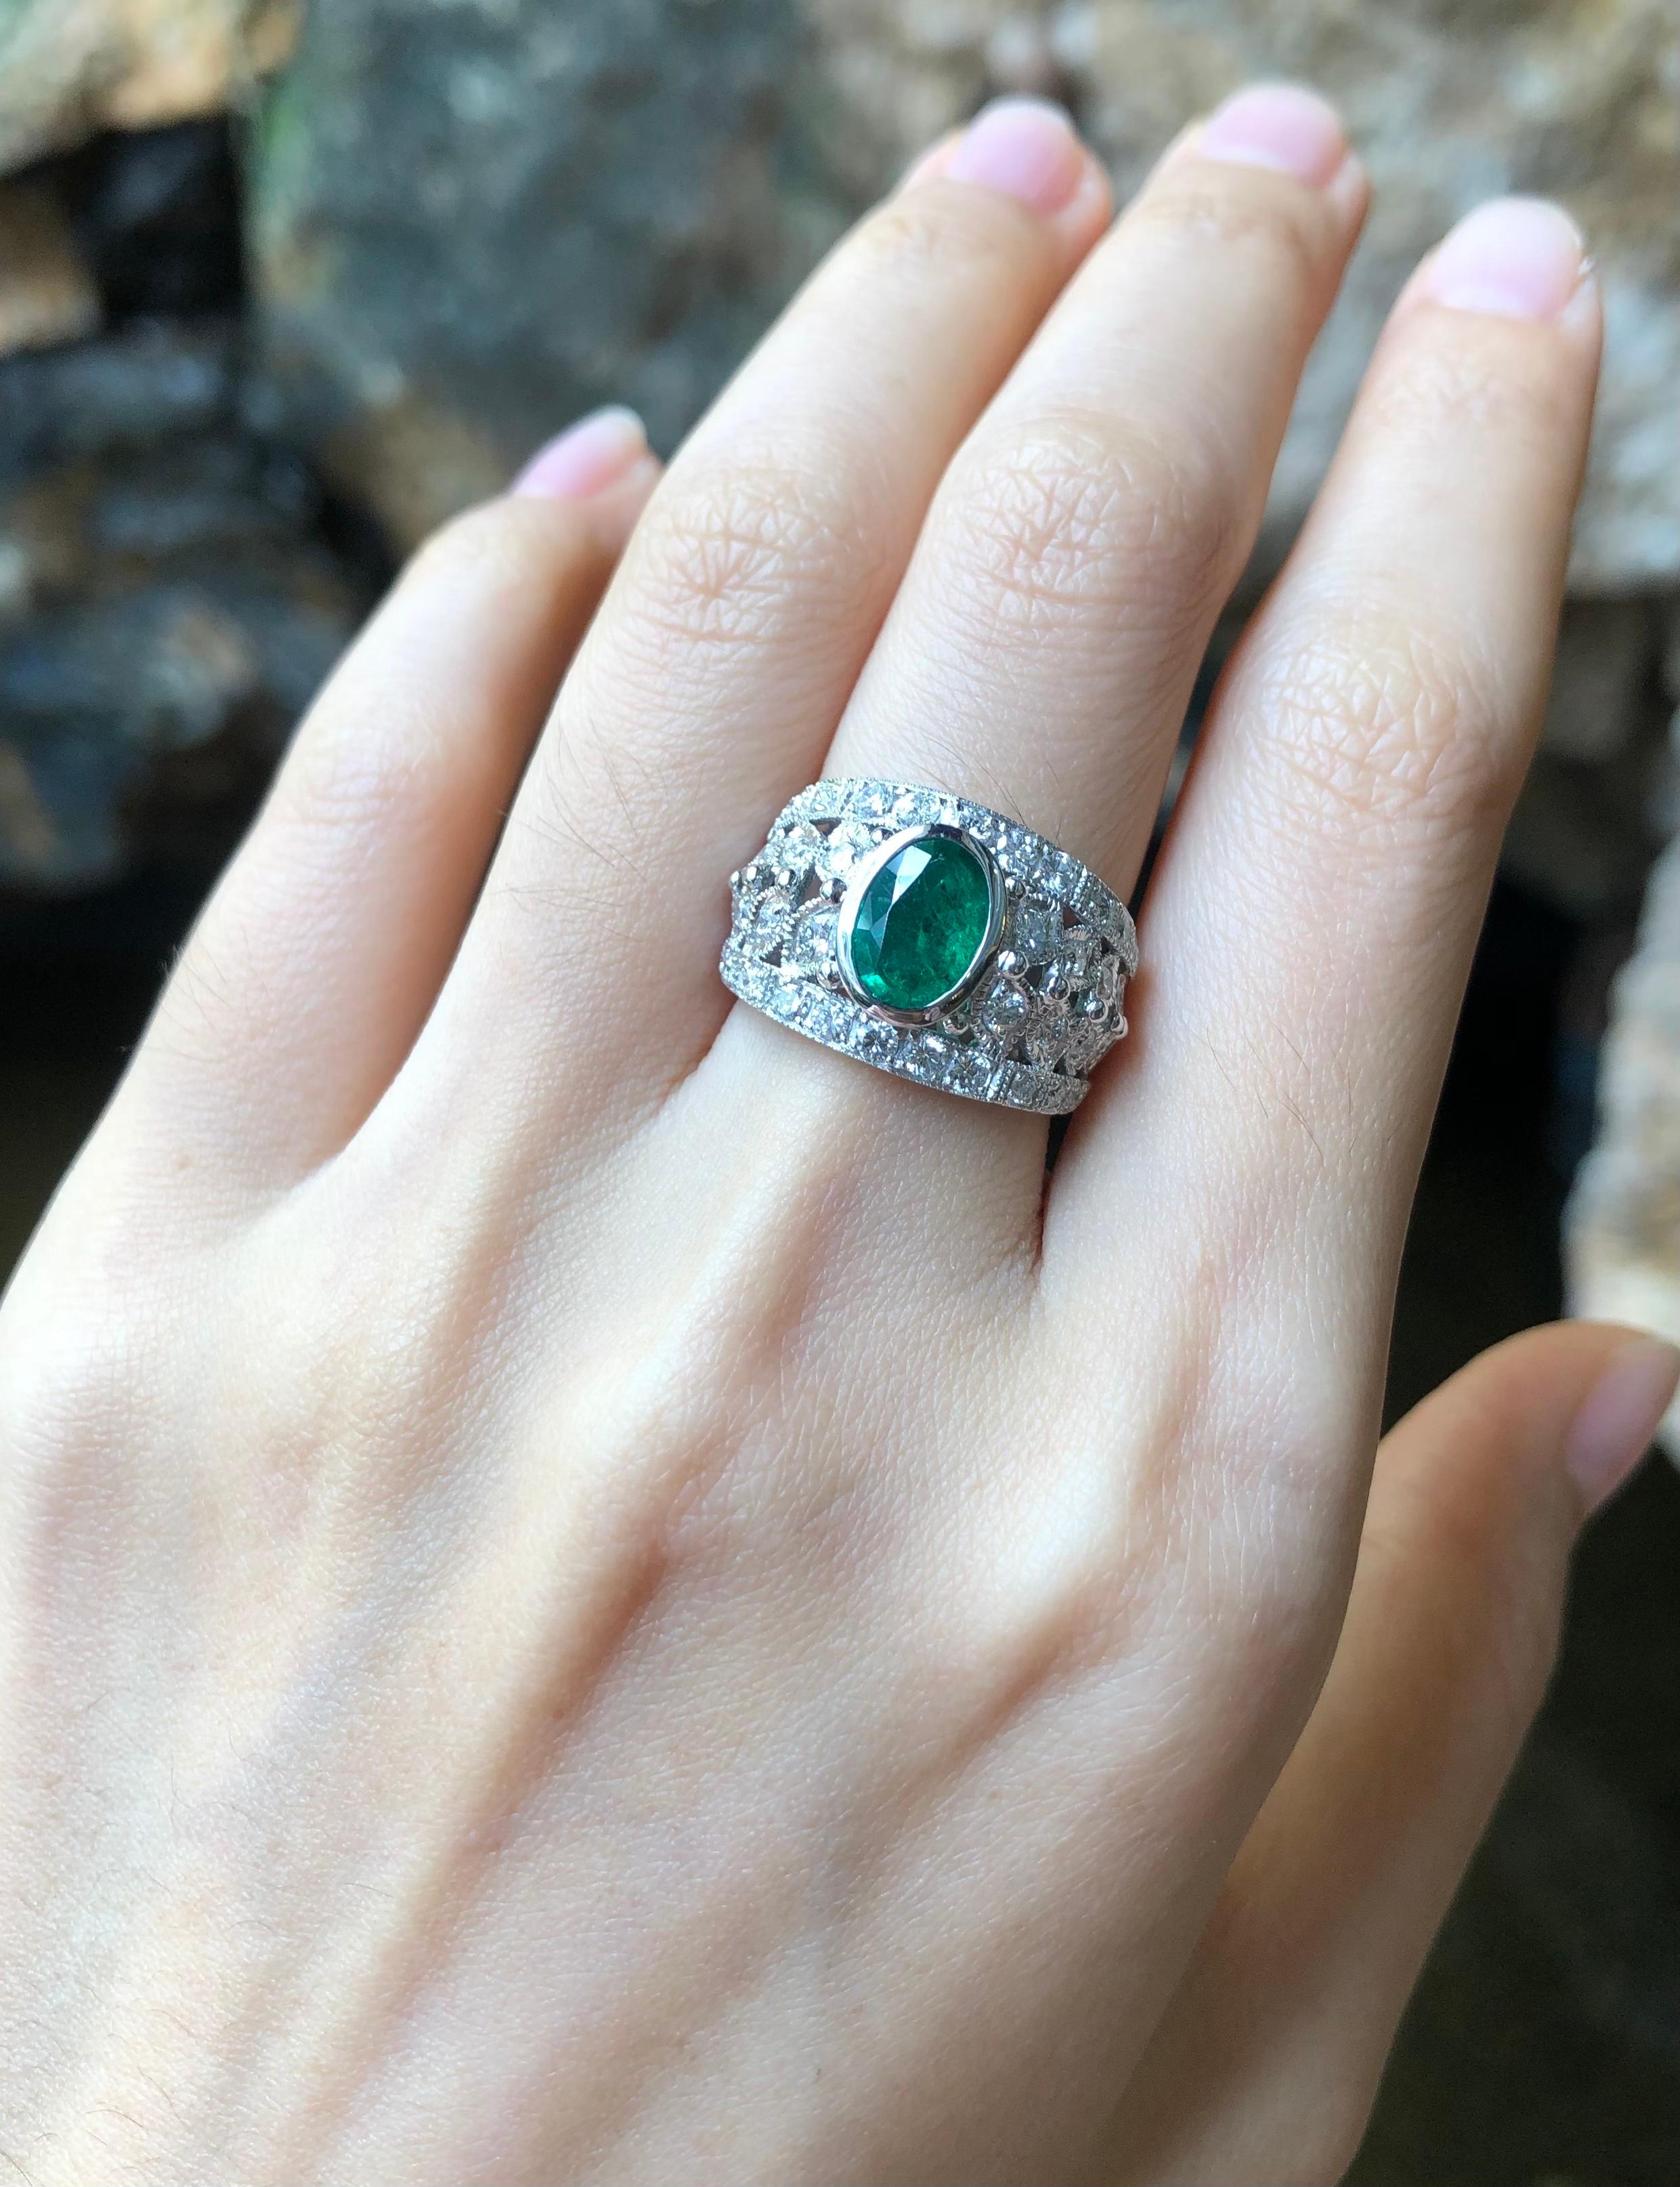 Emerald 0.90 carat with Diamond 0.86 carat Ring set in 18 Karat White Gold Settings

Width:  1.1 cm 
Length:  1.2 cm
Ring Size: 51
Total Weight: 7.21 grams

